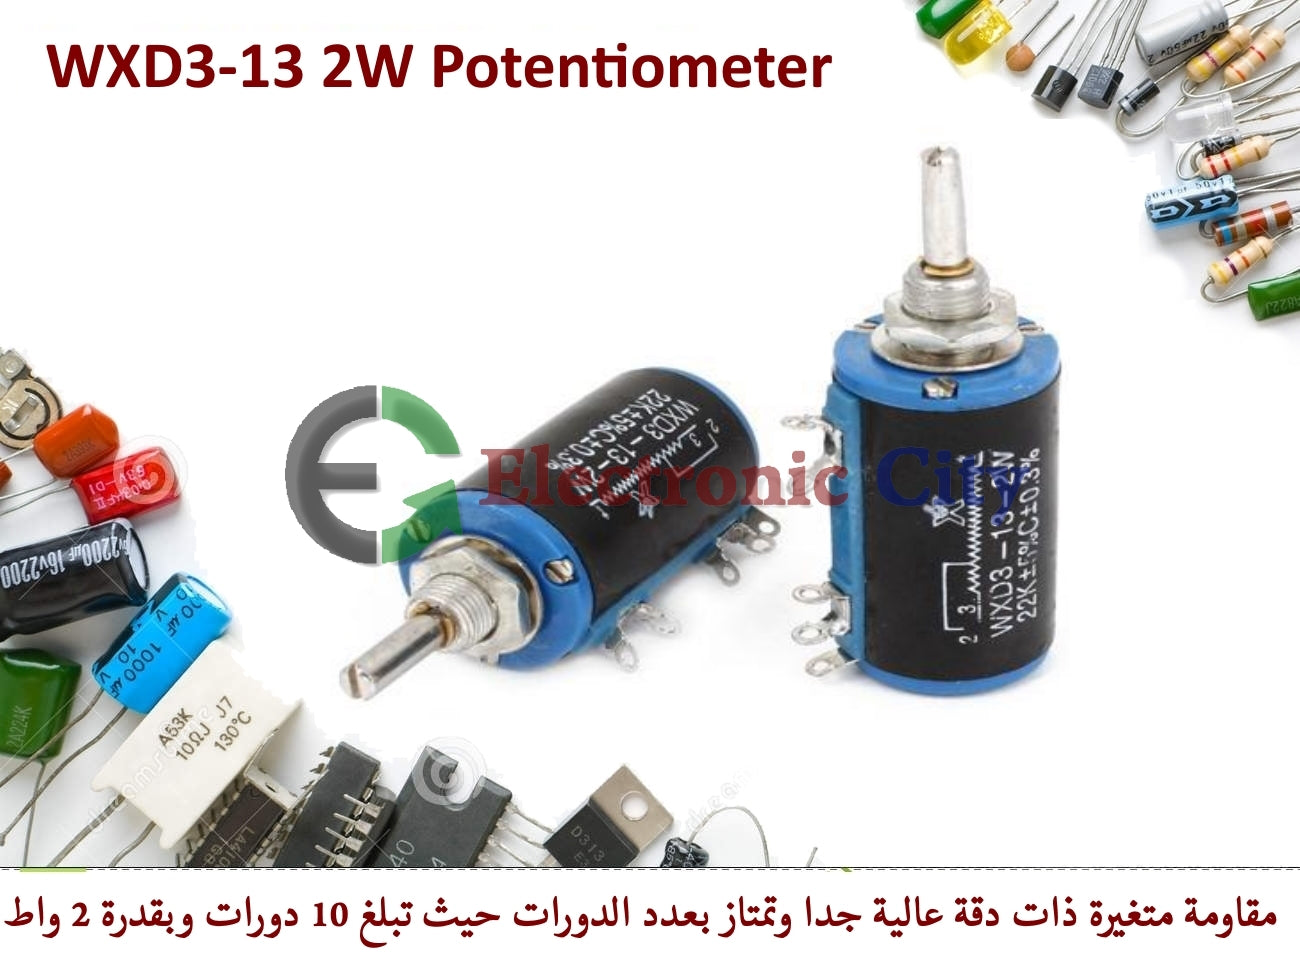 WXD3-13 2W Potentiometer